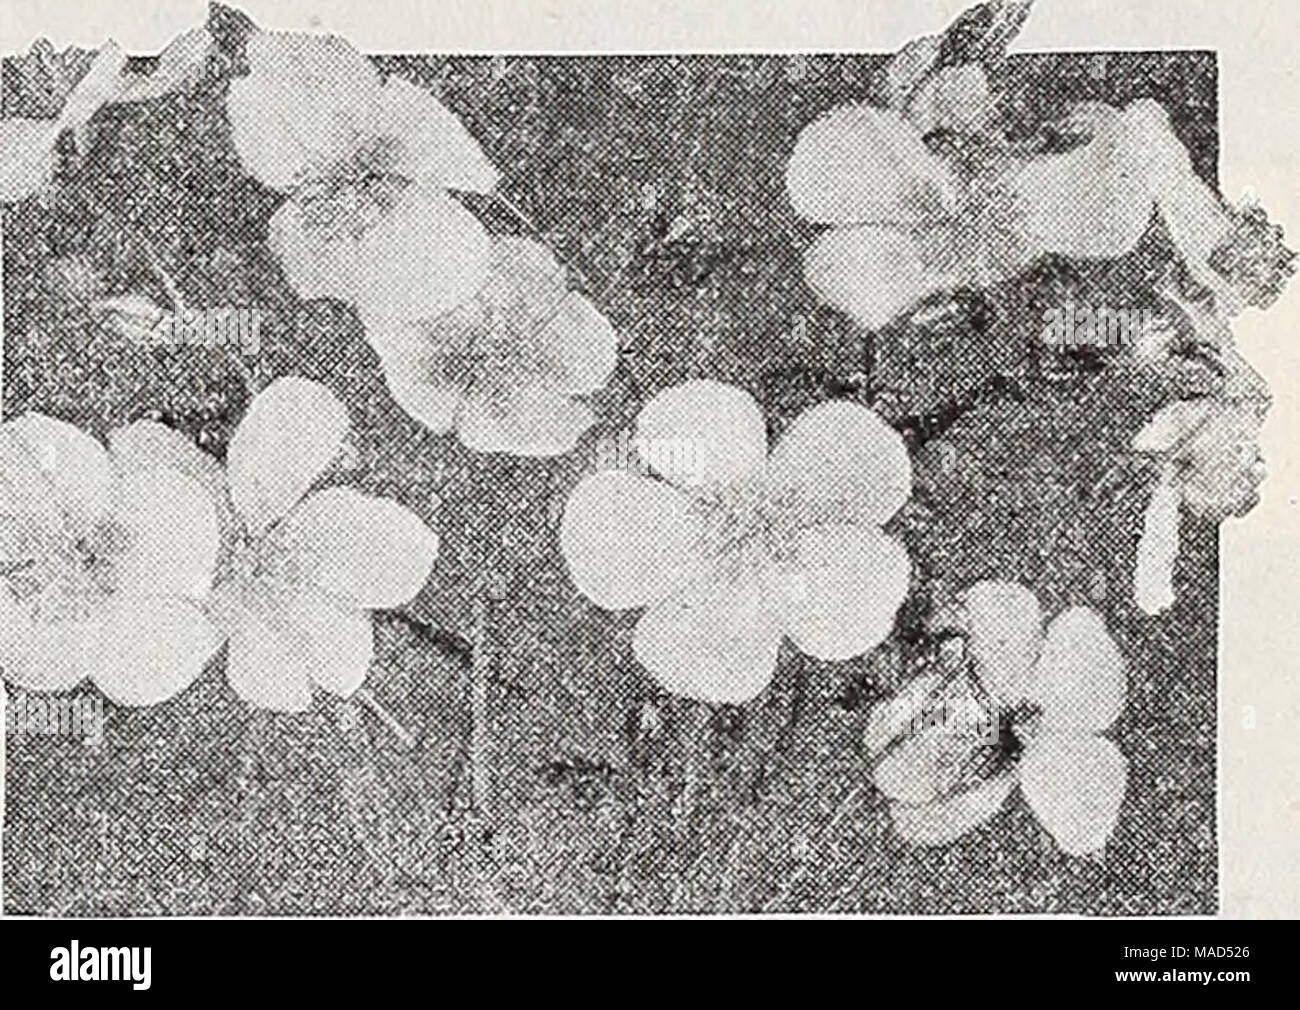 . Dreer's wholesale catalog for florists : winter - spring - summer 1938 . Helianthemum Helianthemurai—Rock Rose Per doz. Per 100 Buttercup. Golden j'ellow. Single. 3-inch pots $2 50 $15 00 Fireball. Fiery double red, 3-incli pots 2 50 15 00 .VTacranthum. Pure white single. 3-inch pots 2 50 15 00 Rhodanthe carnetim. Pretty single pink flowers and silvery foliage. 3-inch pots 2 50 15 00 Helianthus—Hardy Sunflower Mazimiliani. 31/2-inch pots 1 50 10 00 Mollis. 31/2-inch pots 1 50 10 00 Multiflorus fl. pi. 3-inch pots 2 00 12 00 Sparsifolius. 3%-inch pots 1 50 10 00 Stock Photo